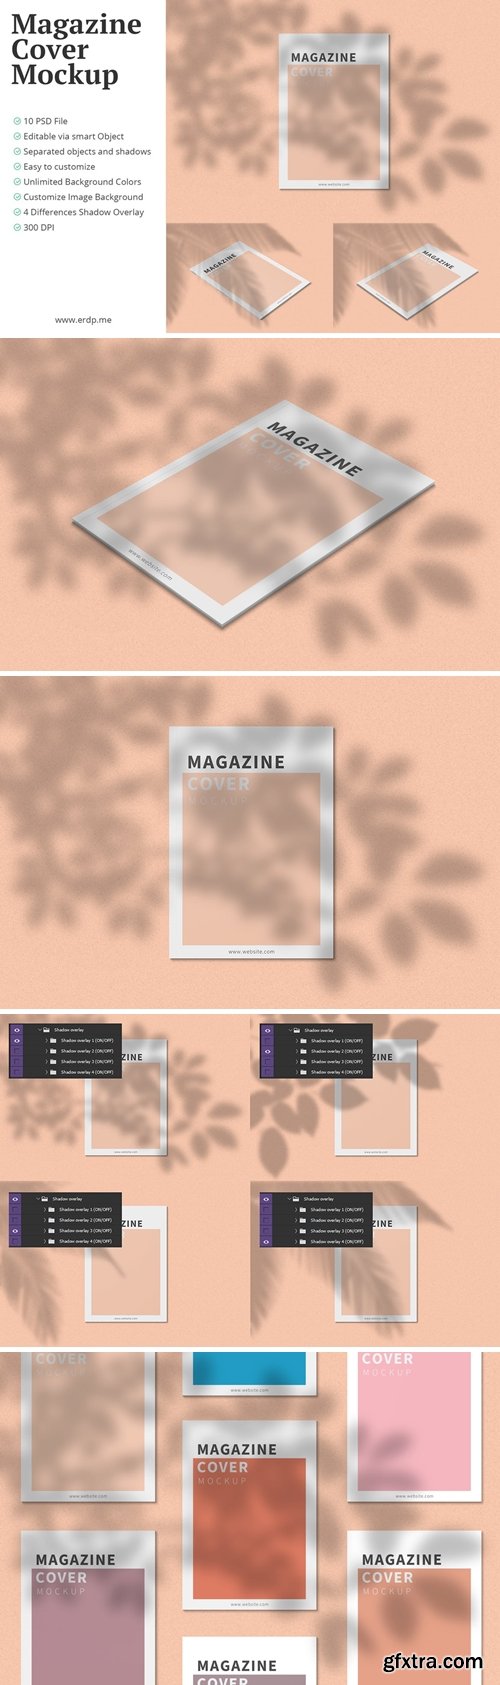 A4 Magazine Cover Mockup 10 PSD Files